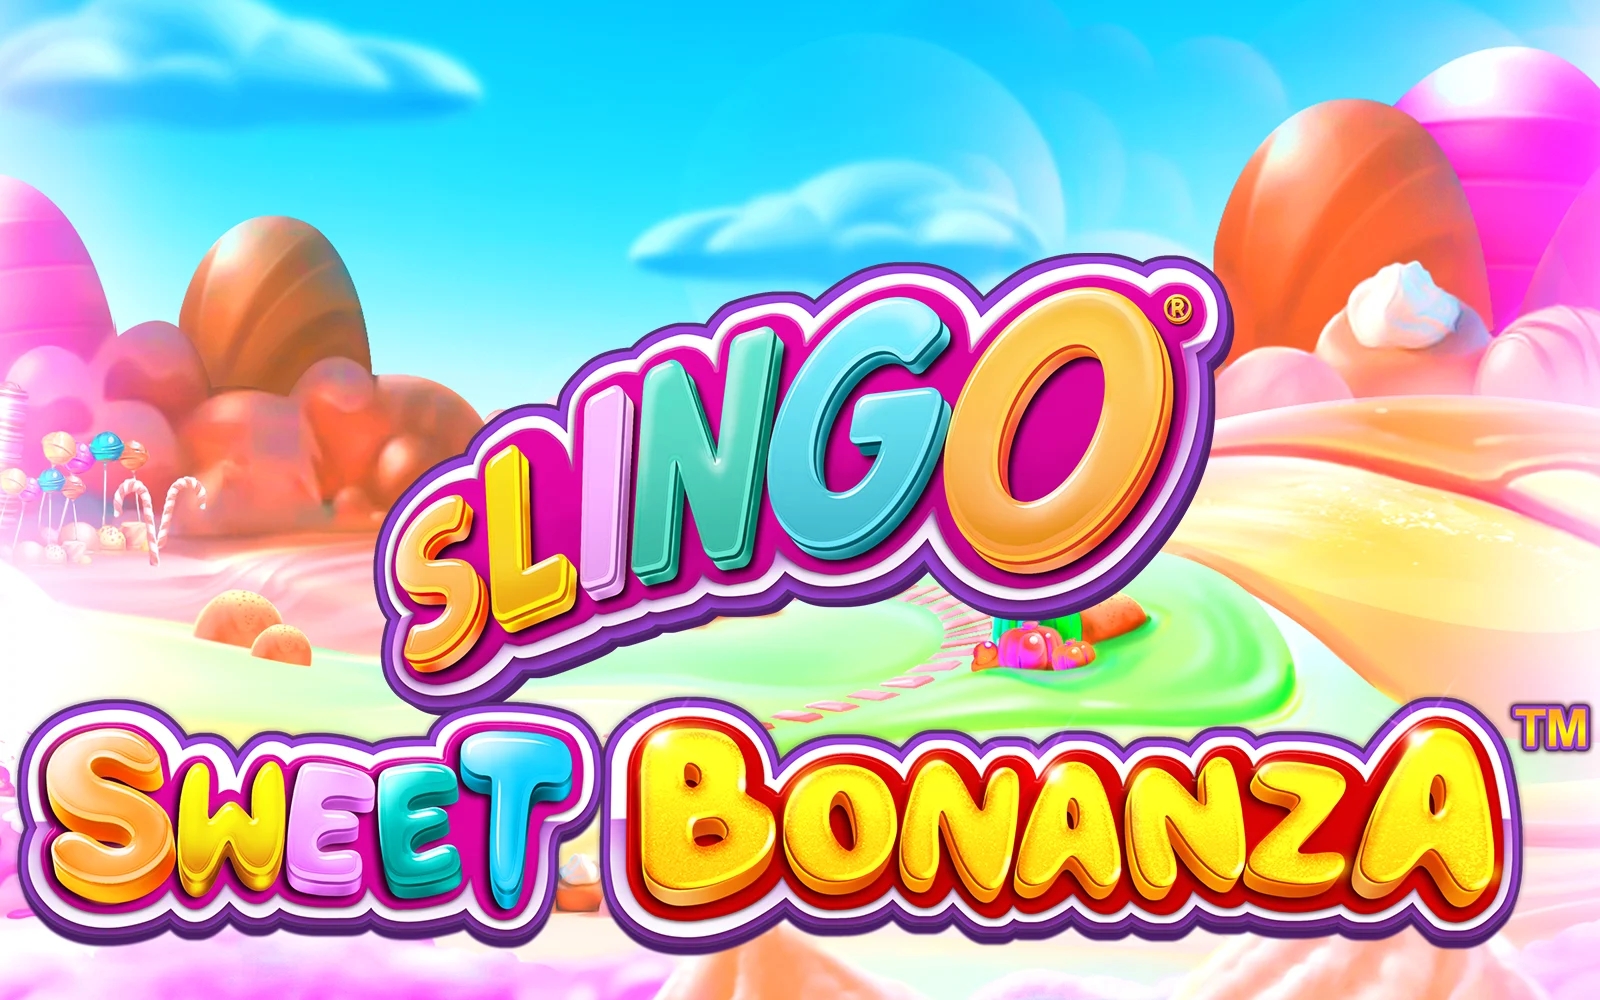 Gioca a Slingo Sweet Bonanza sul casino online Starcasino.be